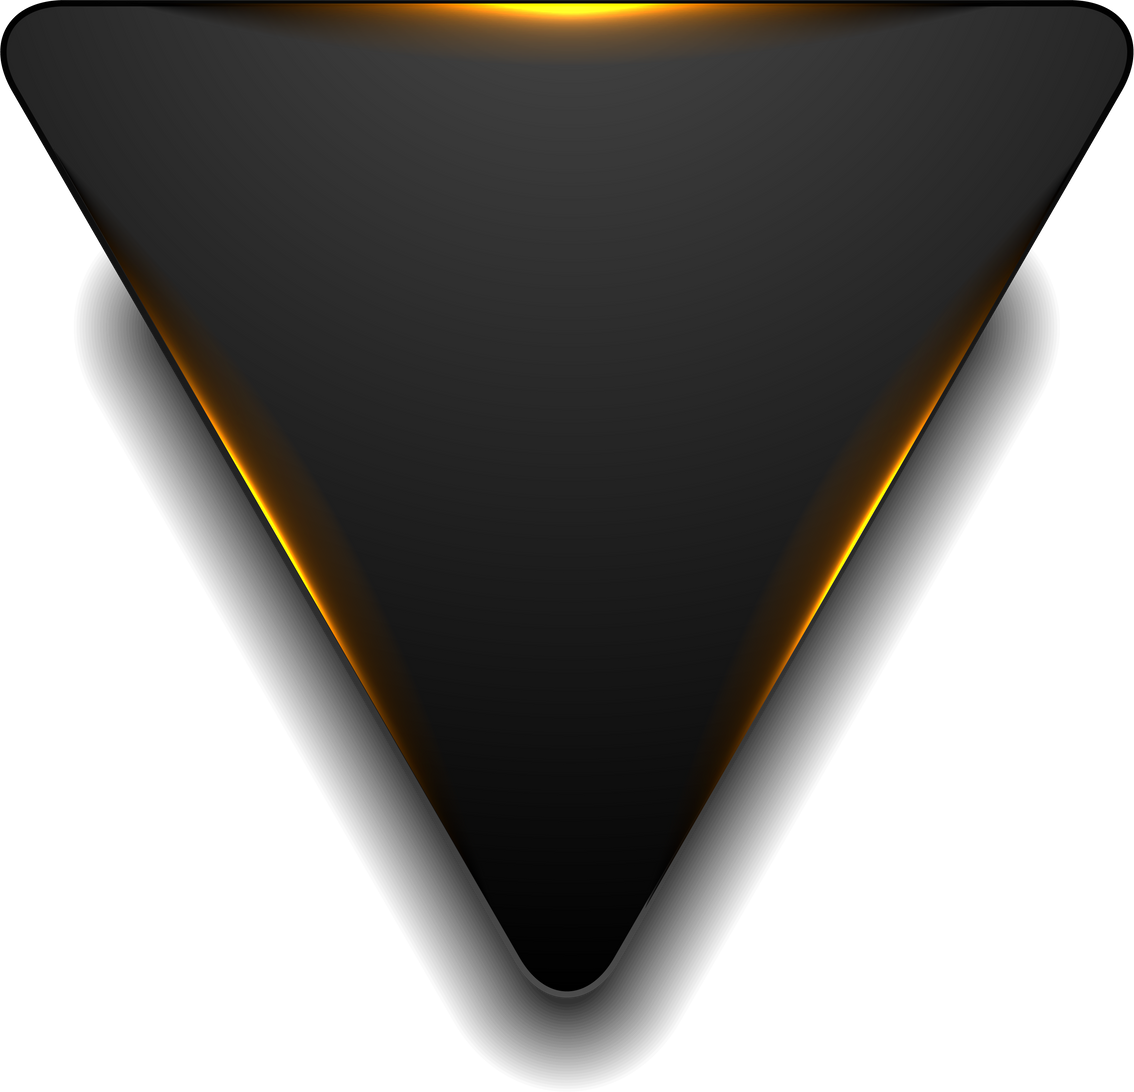 Black triangle with fiery orange lights